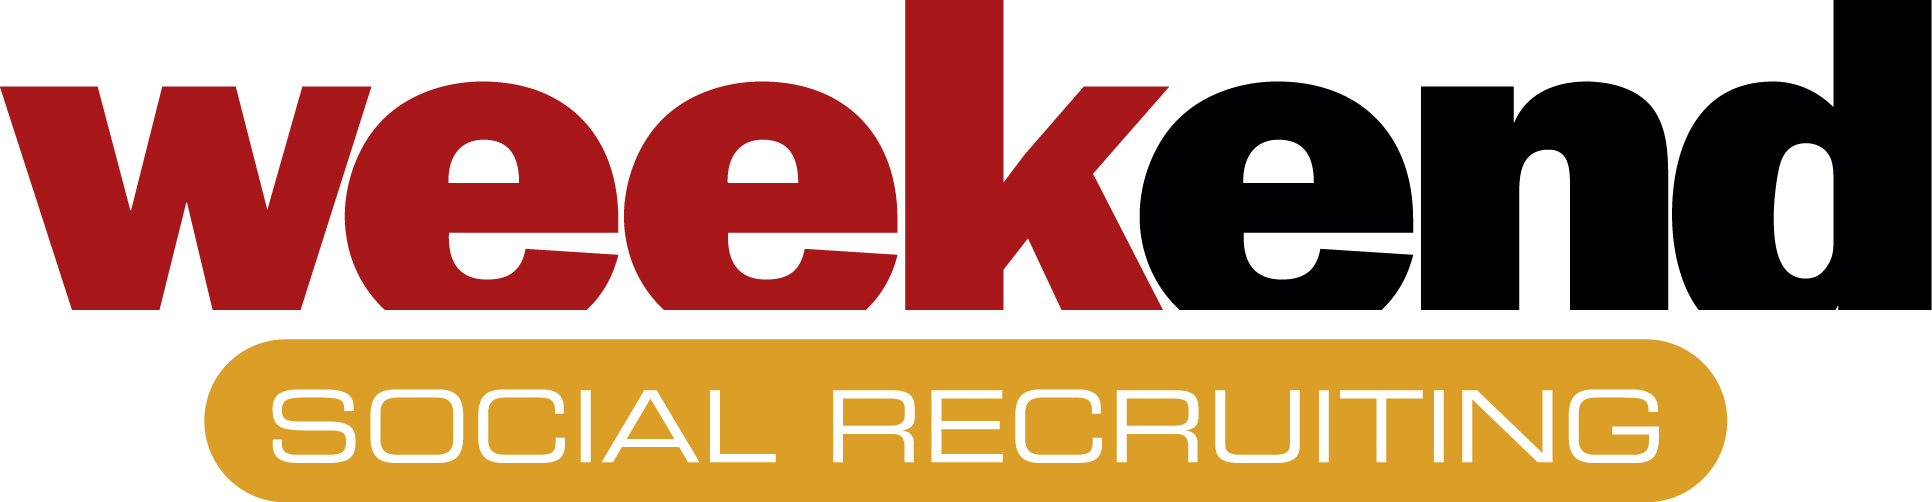 Weekend Social Recruiting Logo